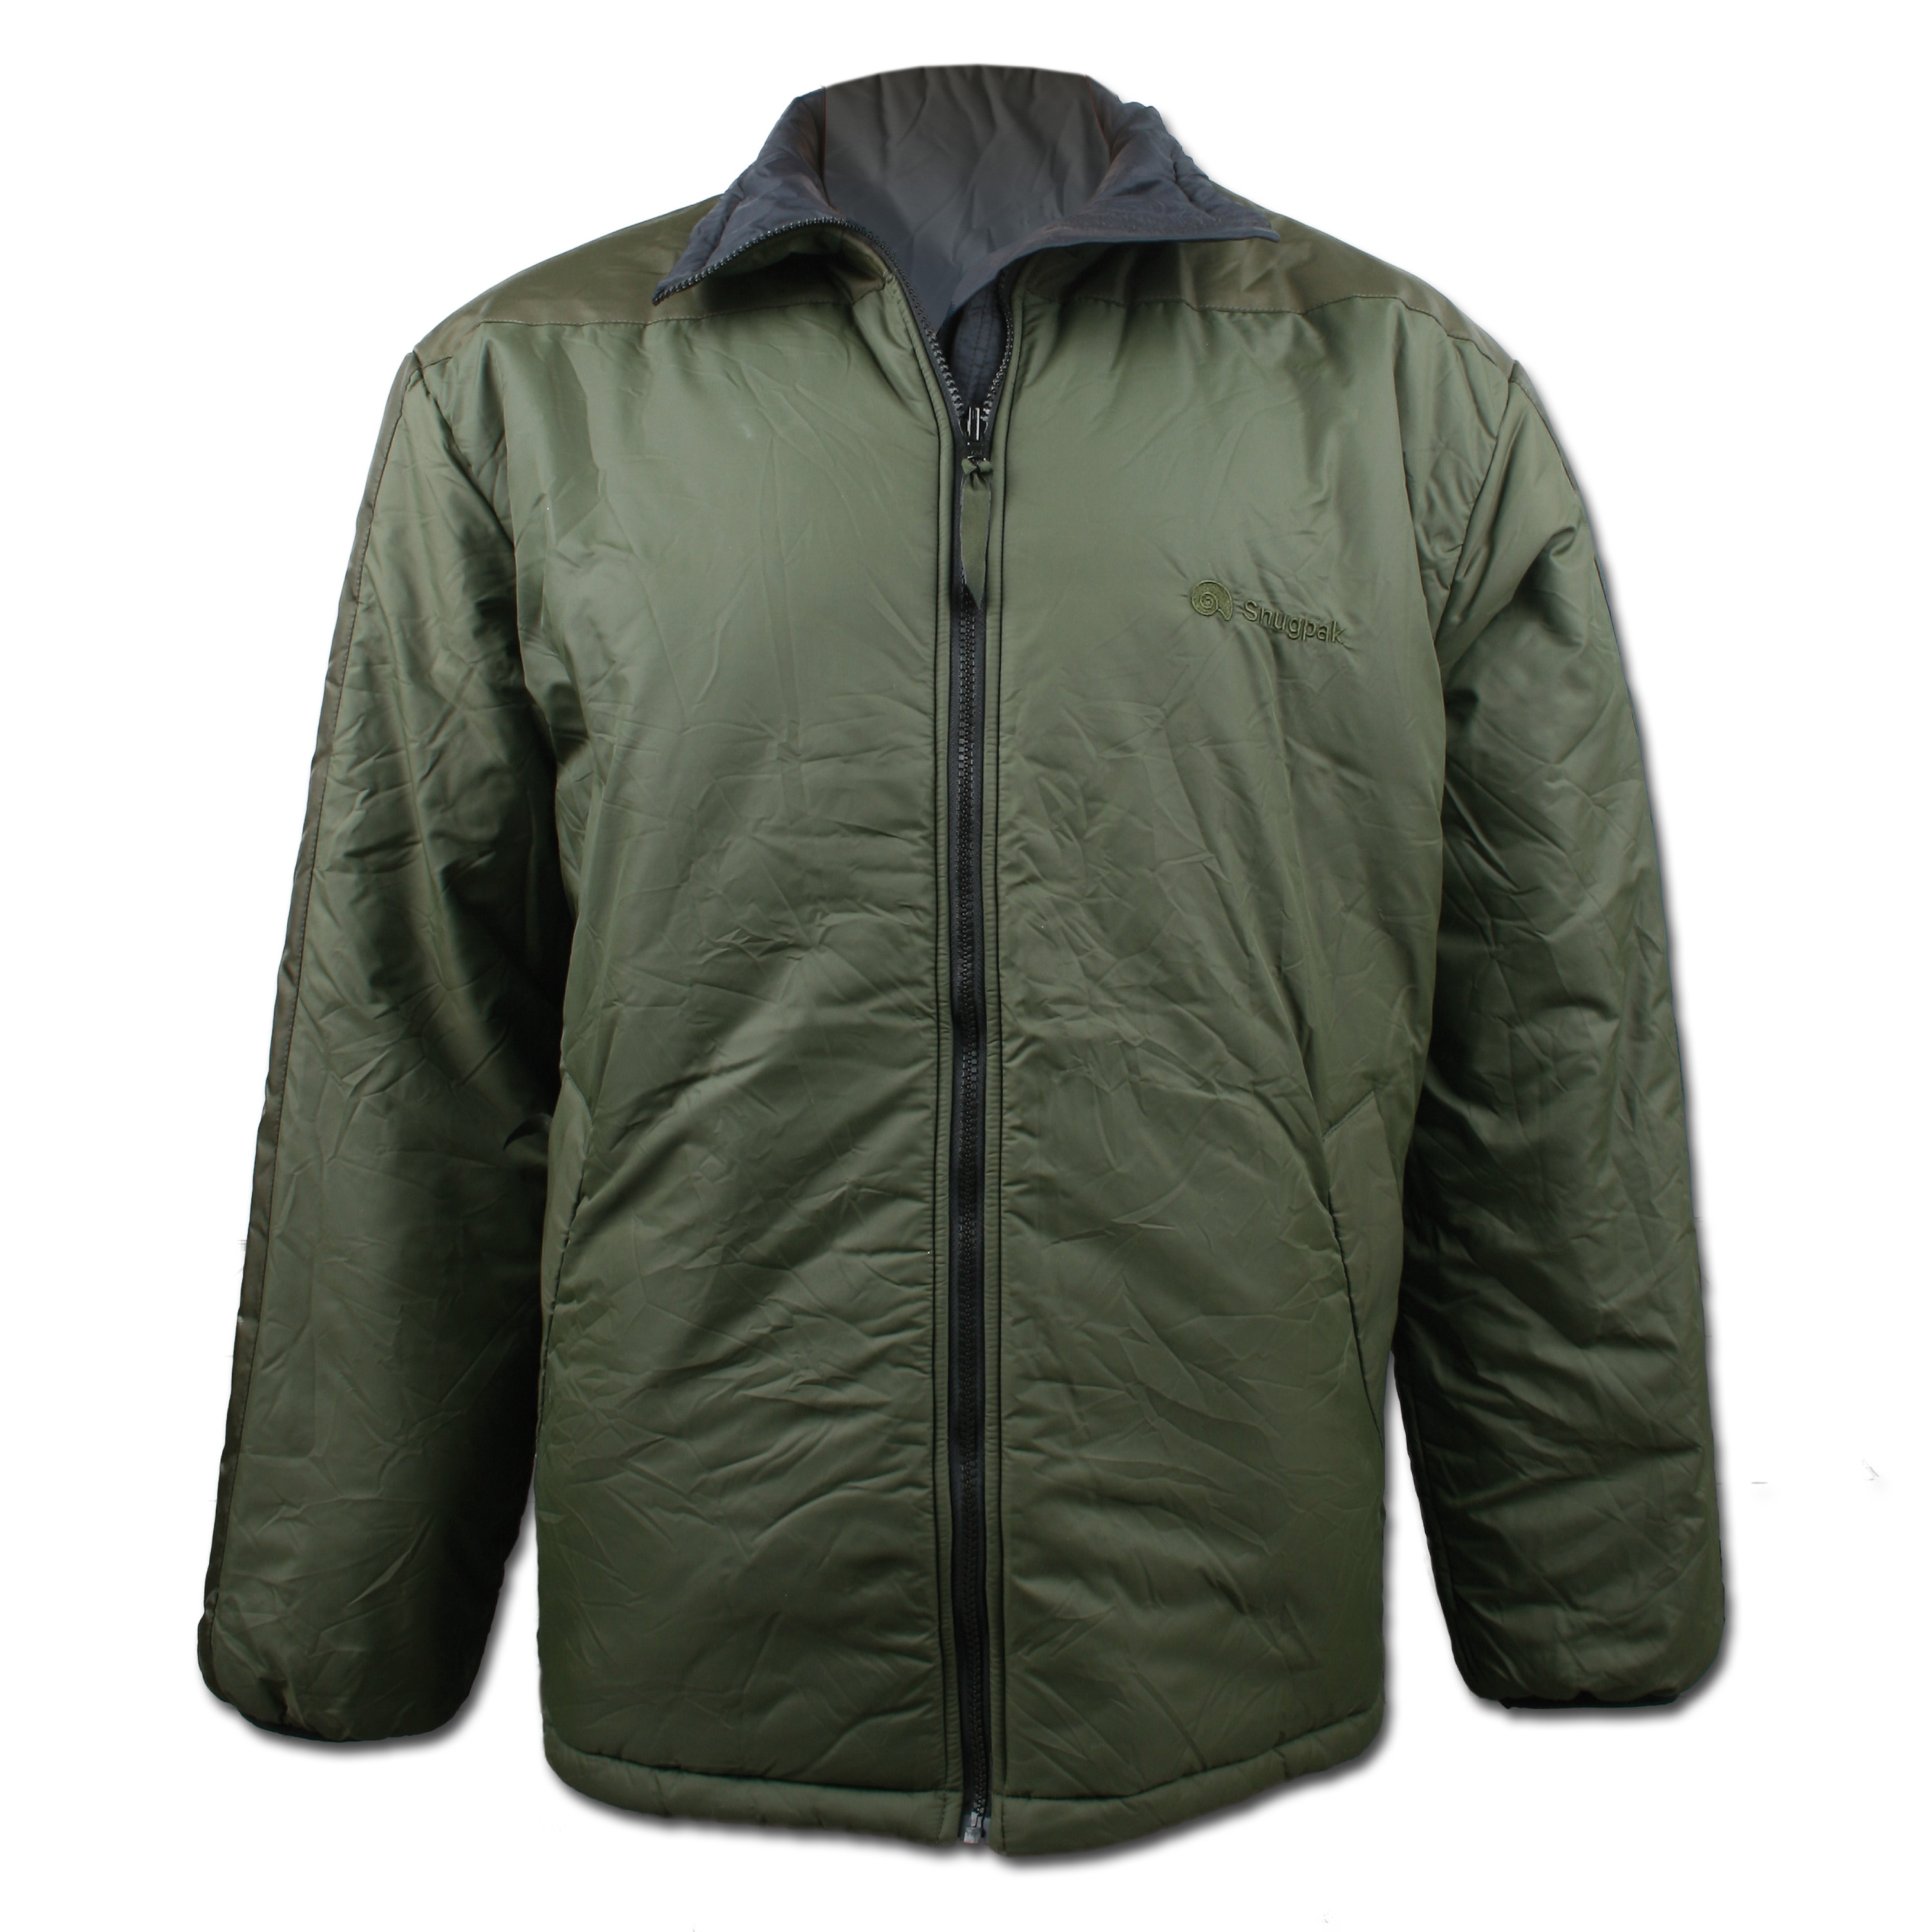 Purchase the Snugpak Jacket Sleeka Elite Reversible by ASMC